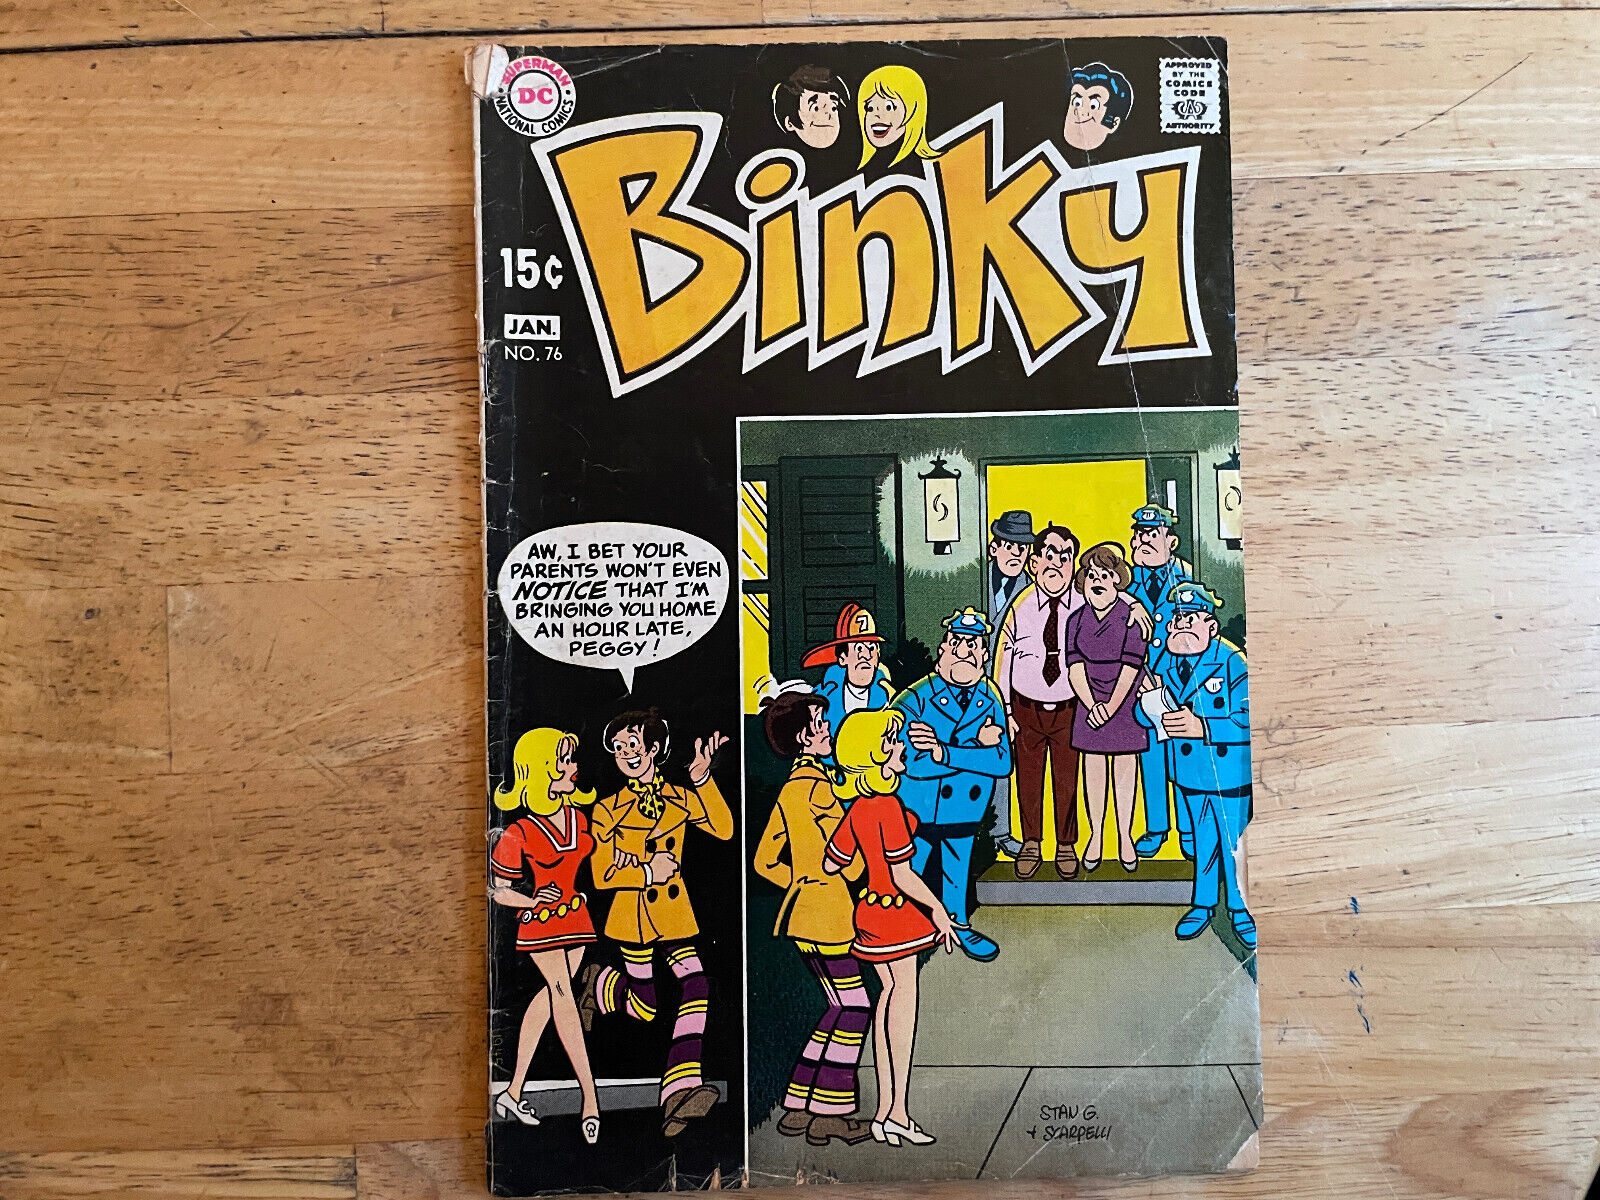 1970 DC ROMANCE LOVE HUMOR ARCHIE LIKE COMIC BOOK BINKY 76 VINTAGE COMEDY ART US